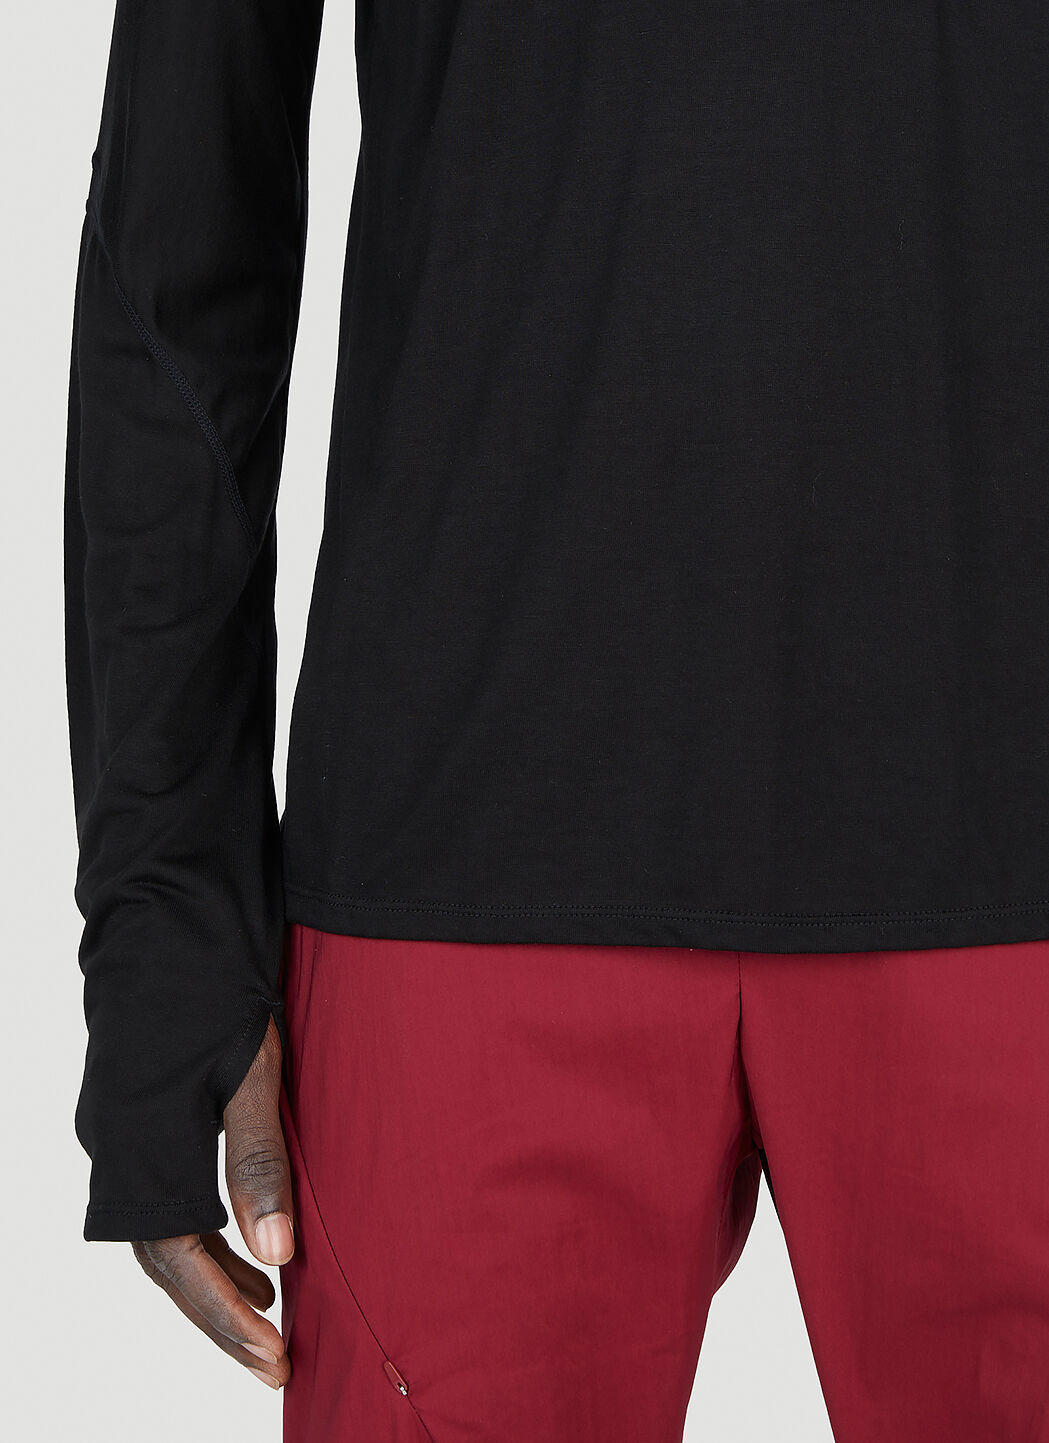 POST ARCHIVE FACTION (PAF) Men's 5.0+ Long Sleeve T-Shirt in Black 